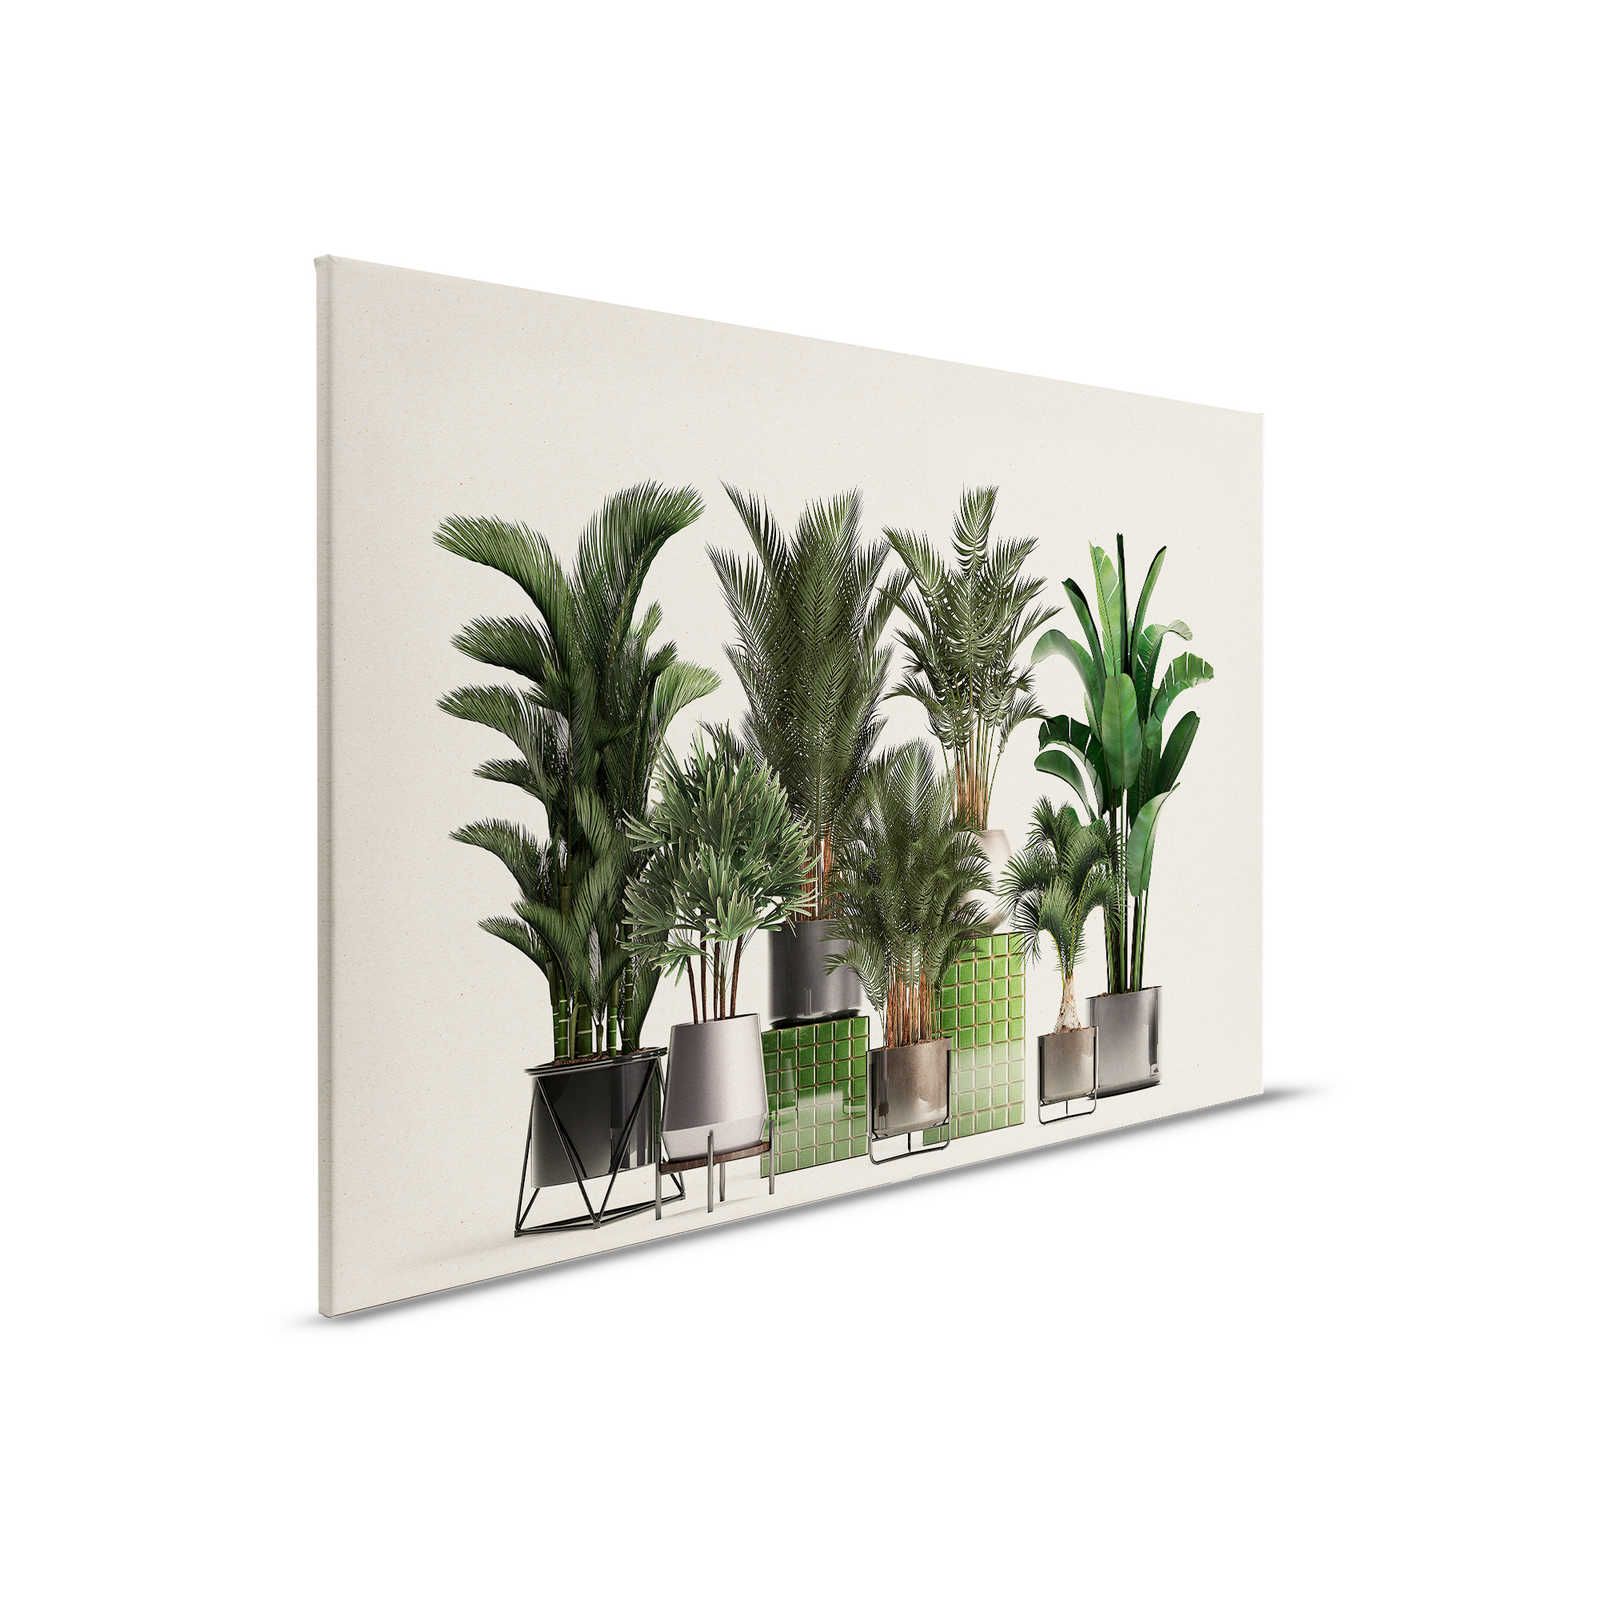 Plantenwinkel 1 - Natuur Canvas Schilderij Potplanten Palmen - 0.90 m x 0.60 m
